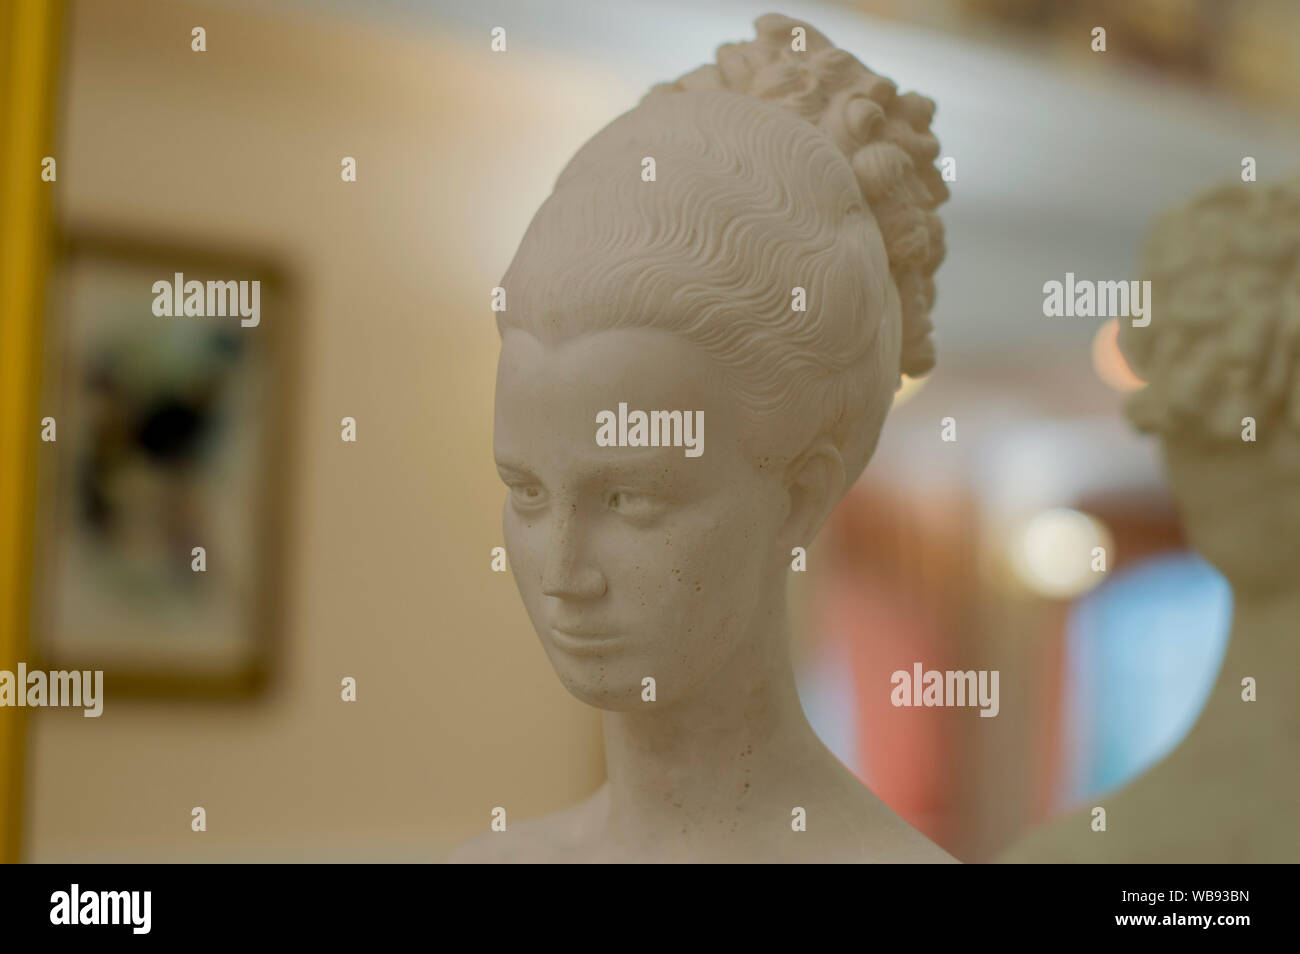 NIZHNY NOVGOROD, RUSSIA October 30, 2016:  The head of a young girl, made of gypsum, on a shelf, near the mirror. Stock Photo